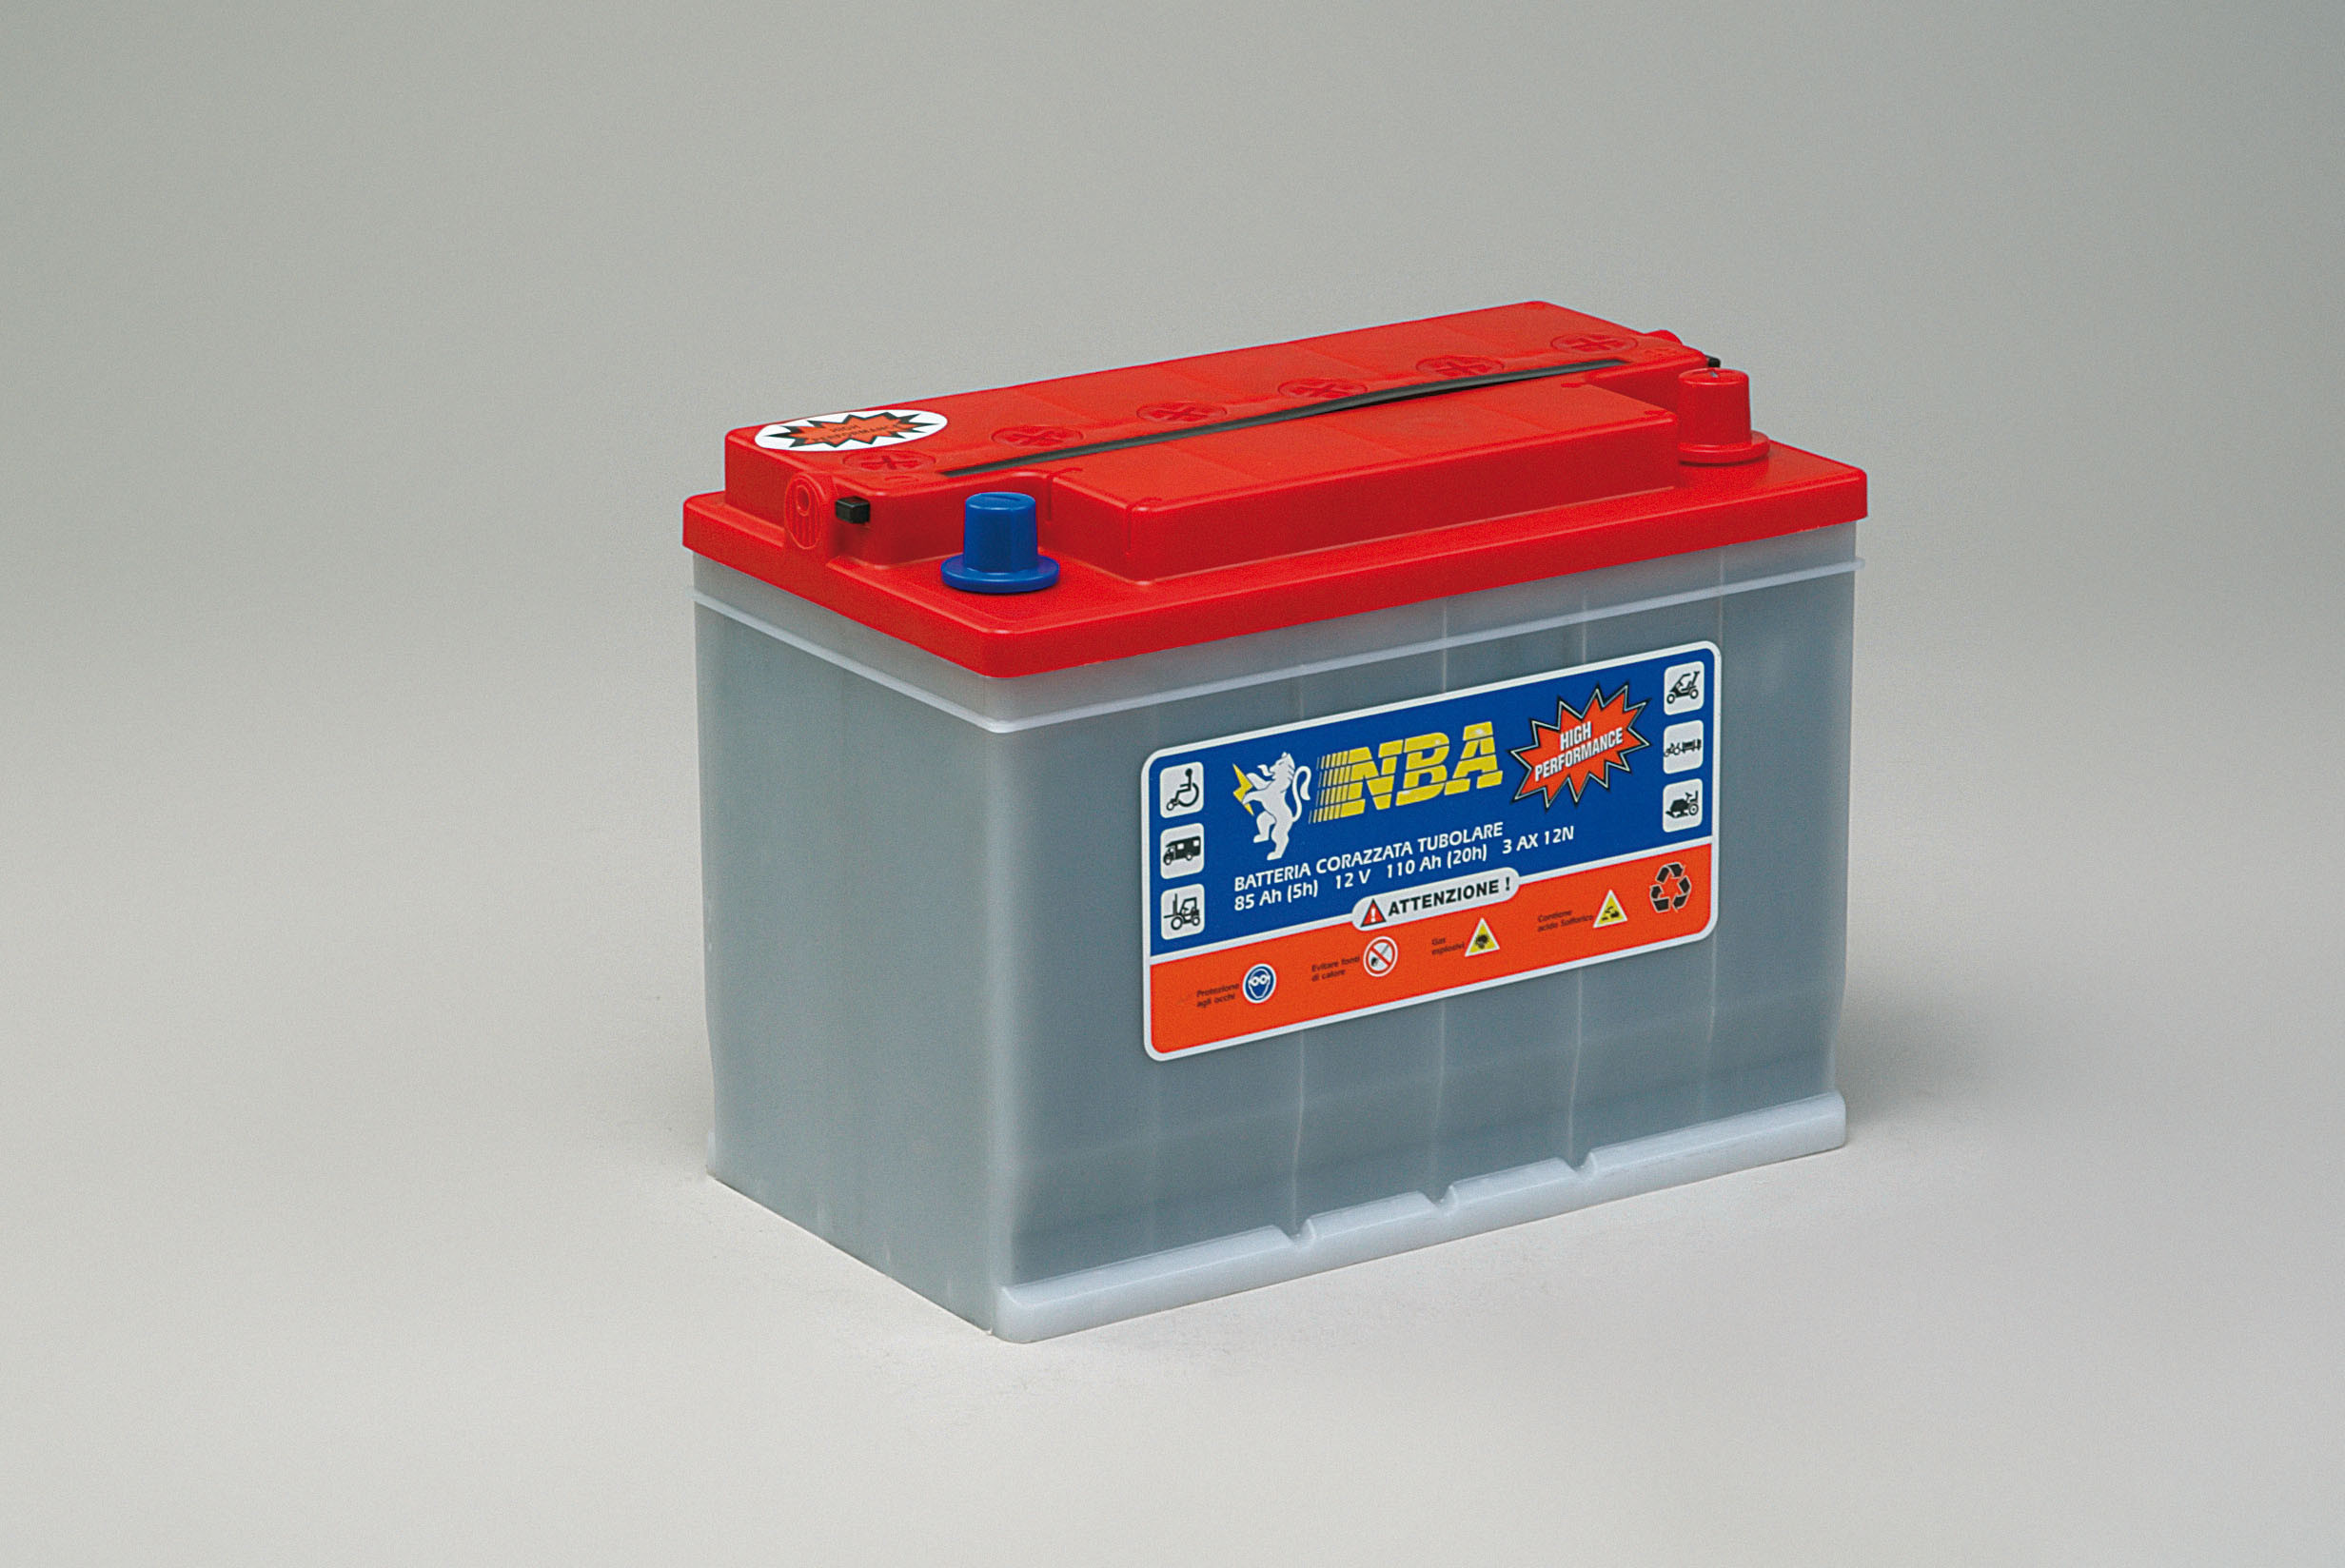 NBA driftsbatteri BLY/SYRE 12v 110ah +h